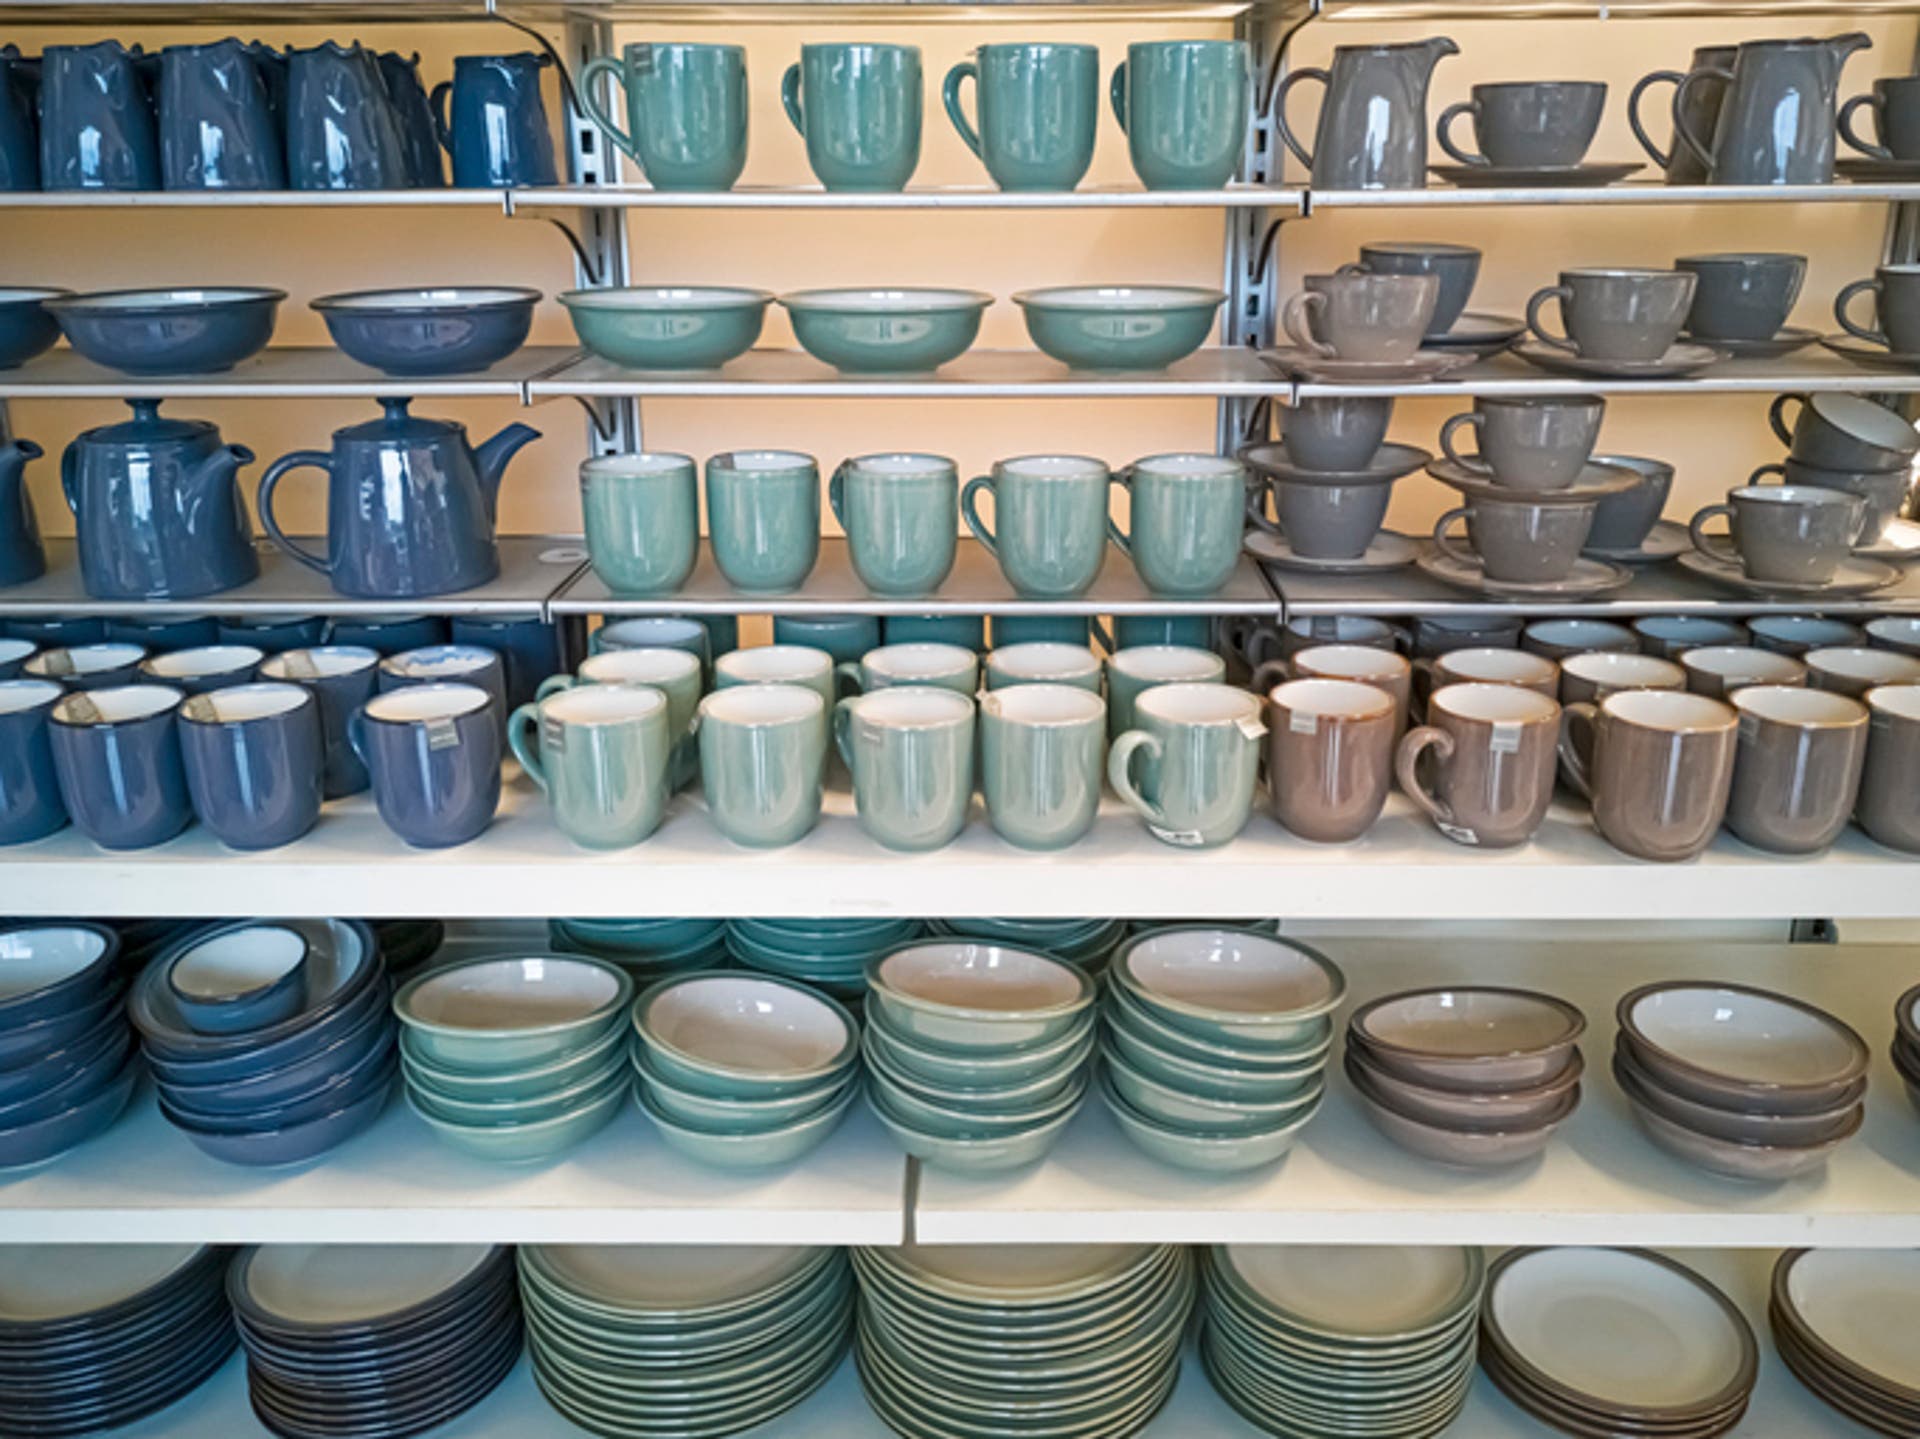  Crockery, porcelain, utensils and other homeware on a shop shelf 